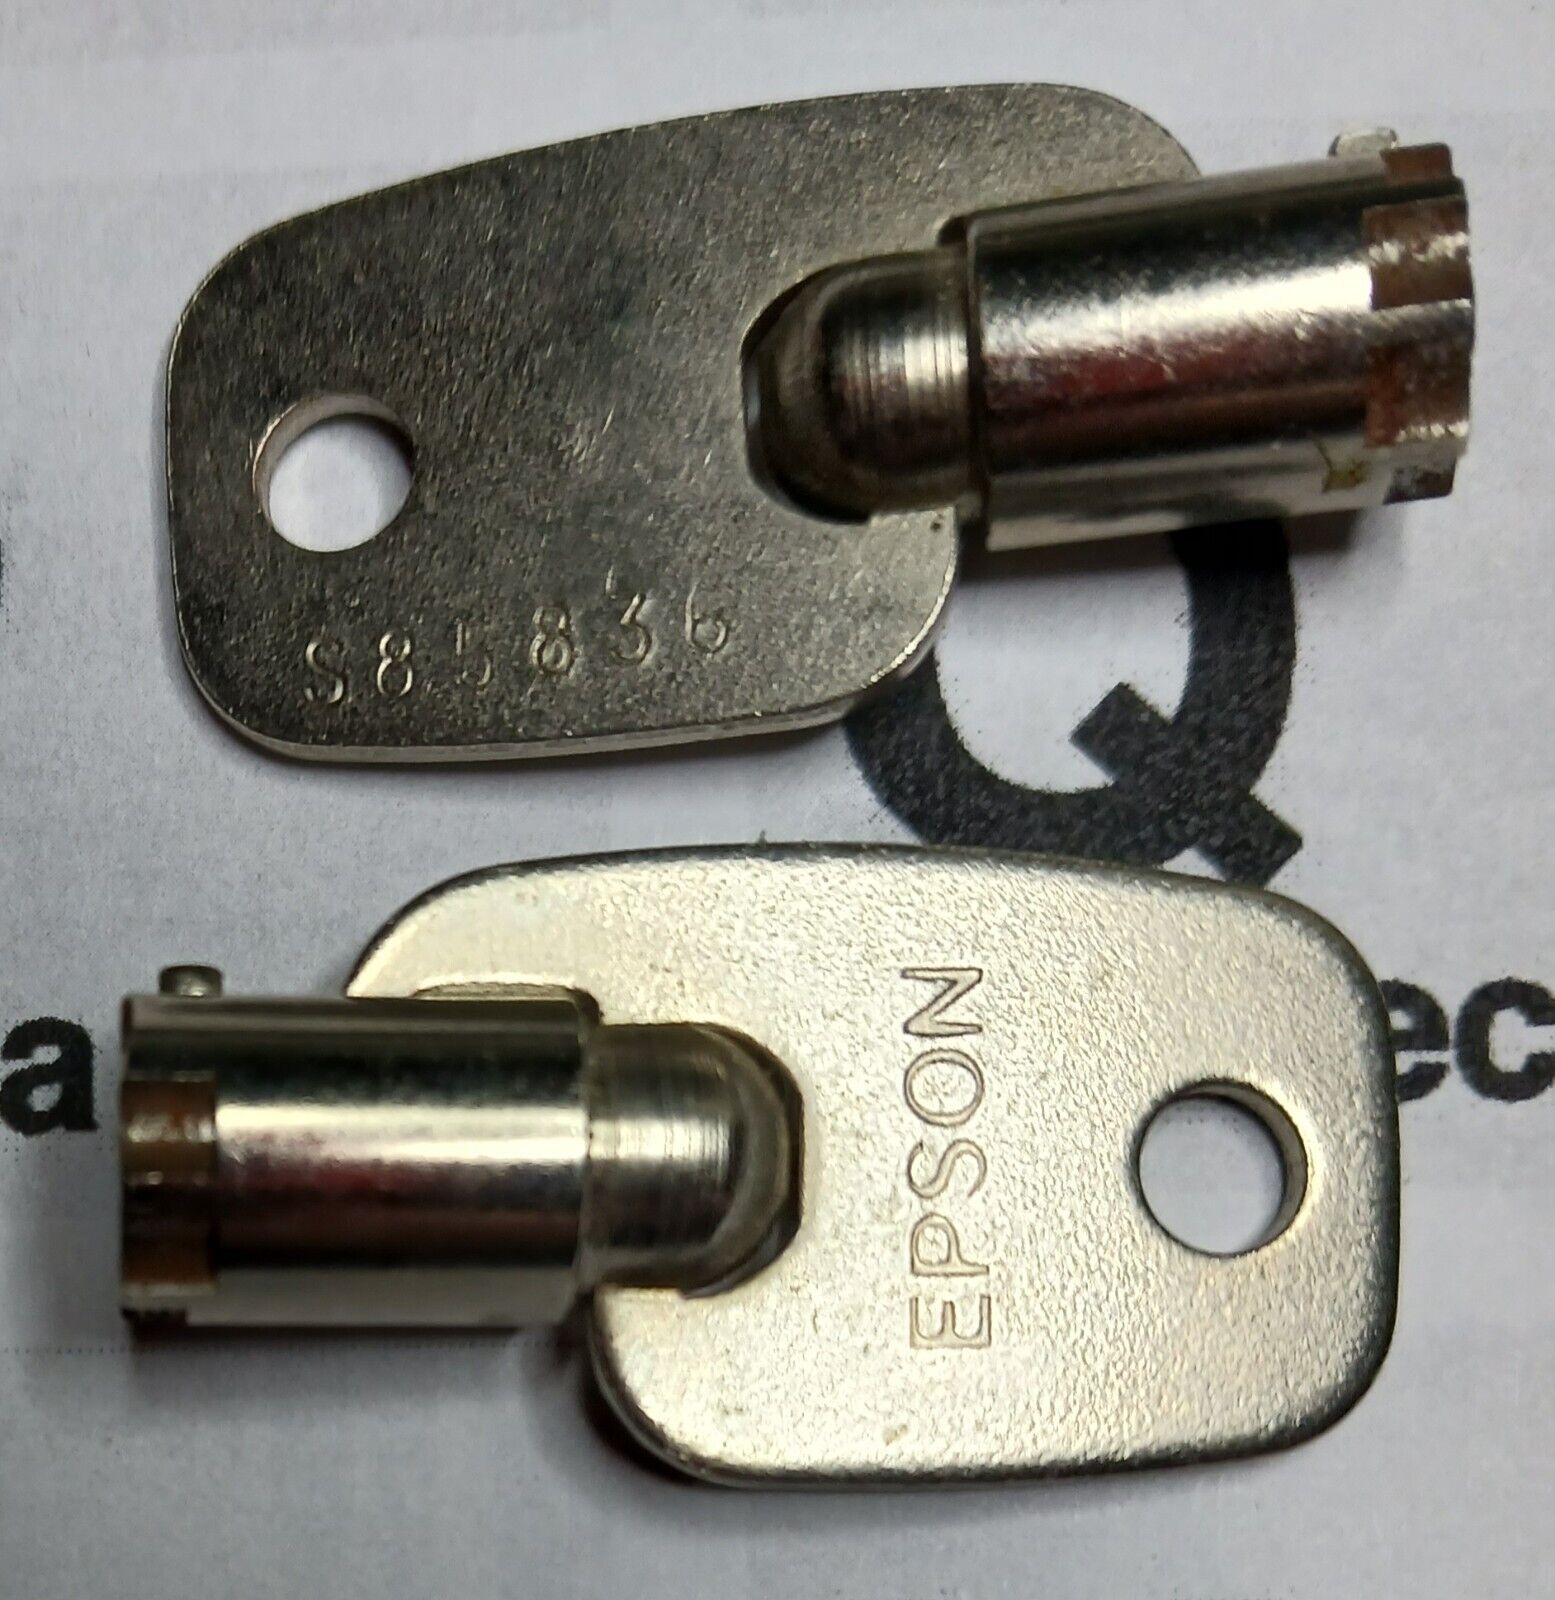 EPSON Equity Case / BIOS Security Lock Keys VINTAGE IBM PC 286 386 Set #1